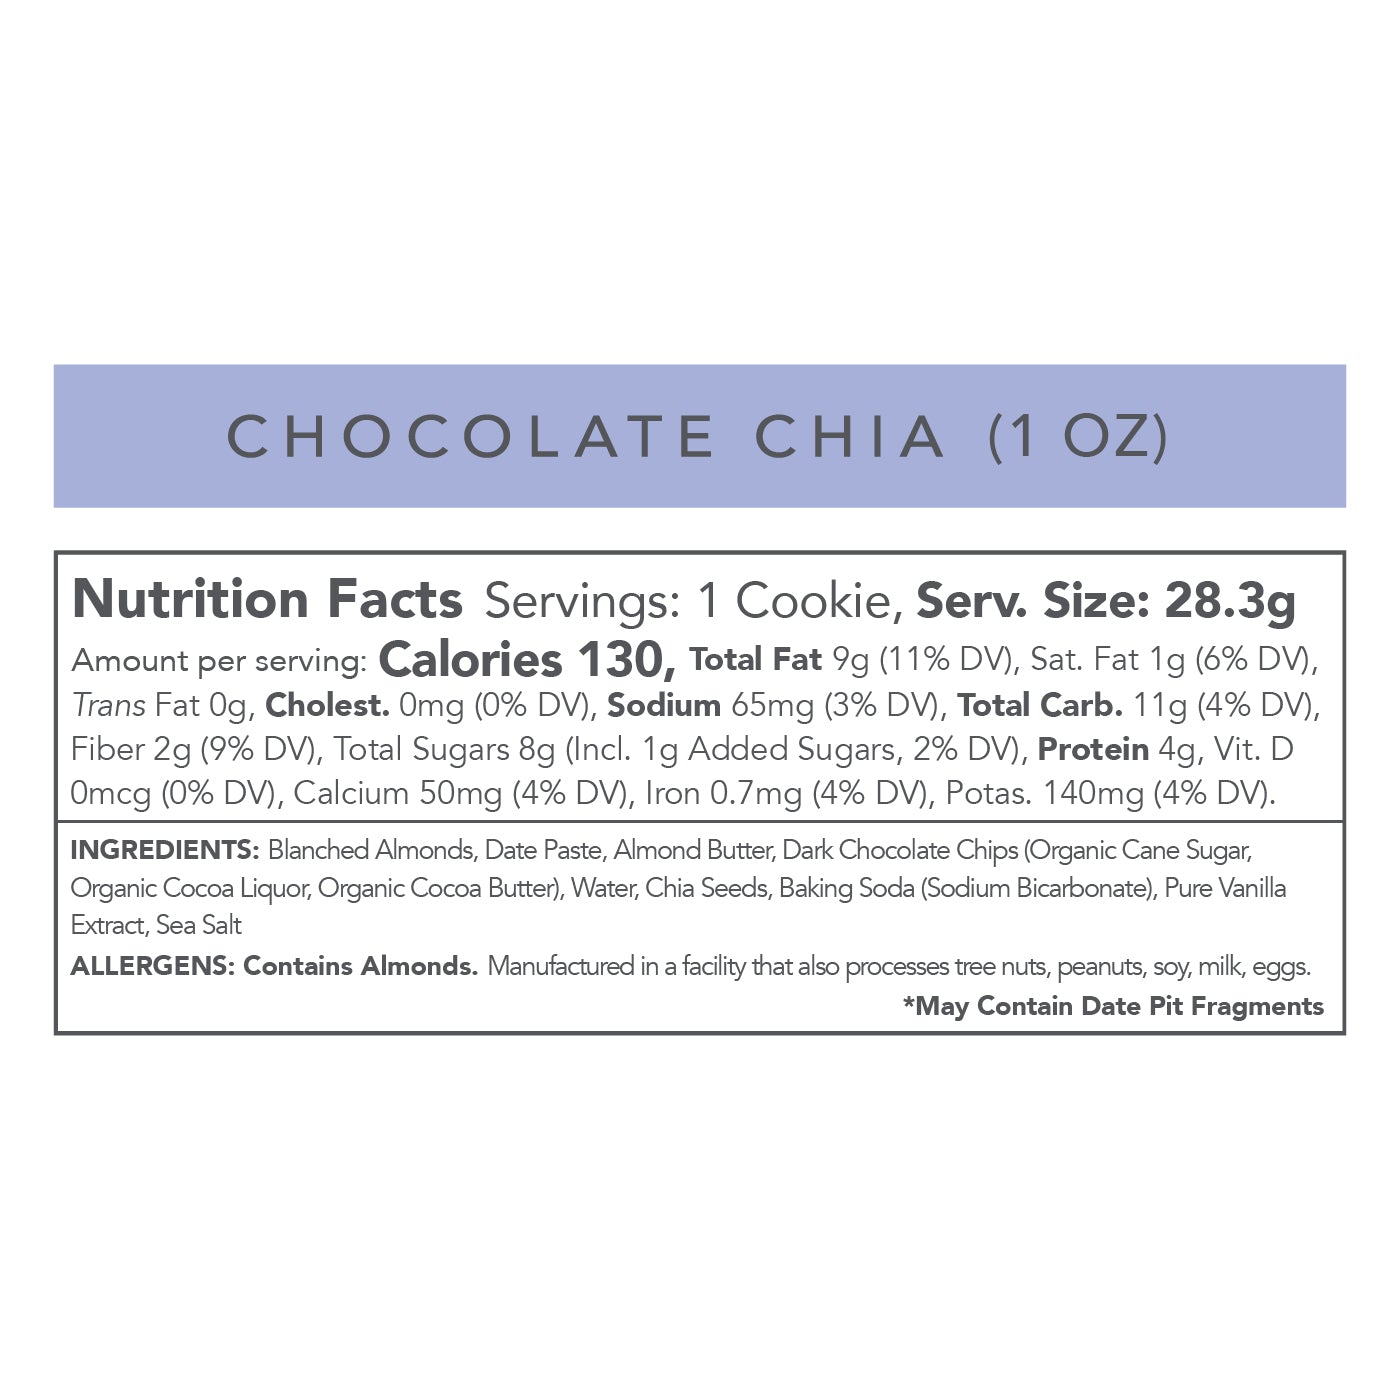 CHOCOLATE CHIA - 1 OZ - BOX OF 80